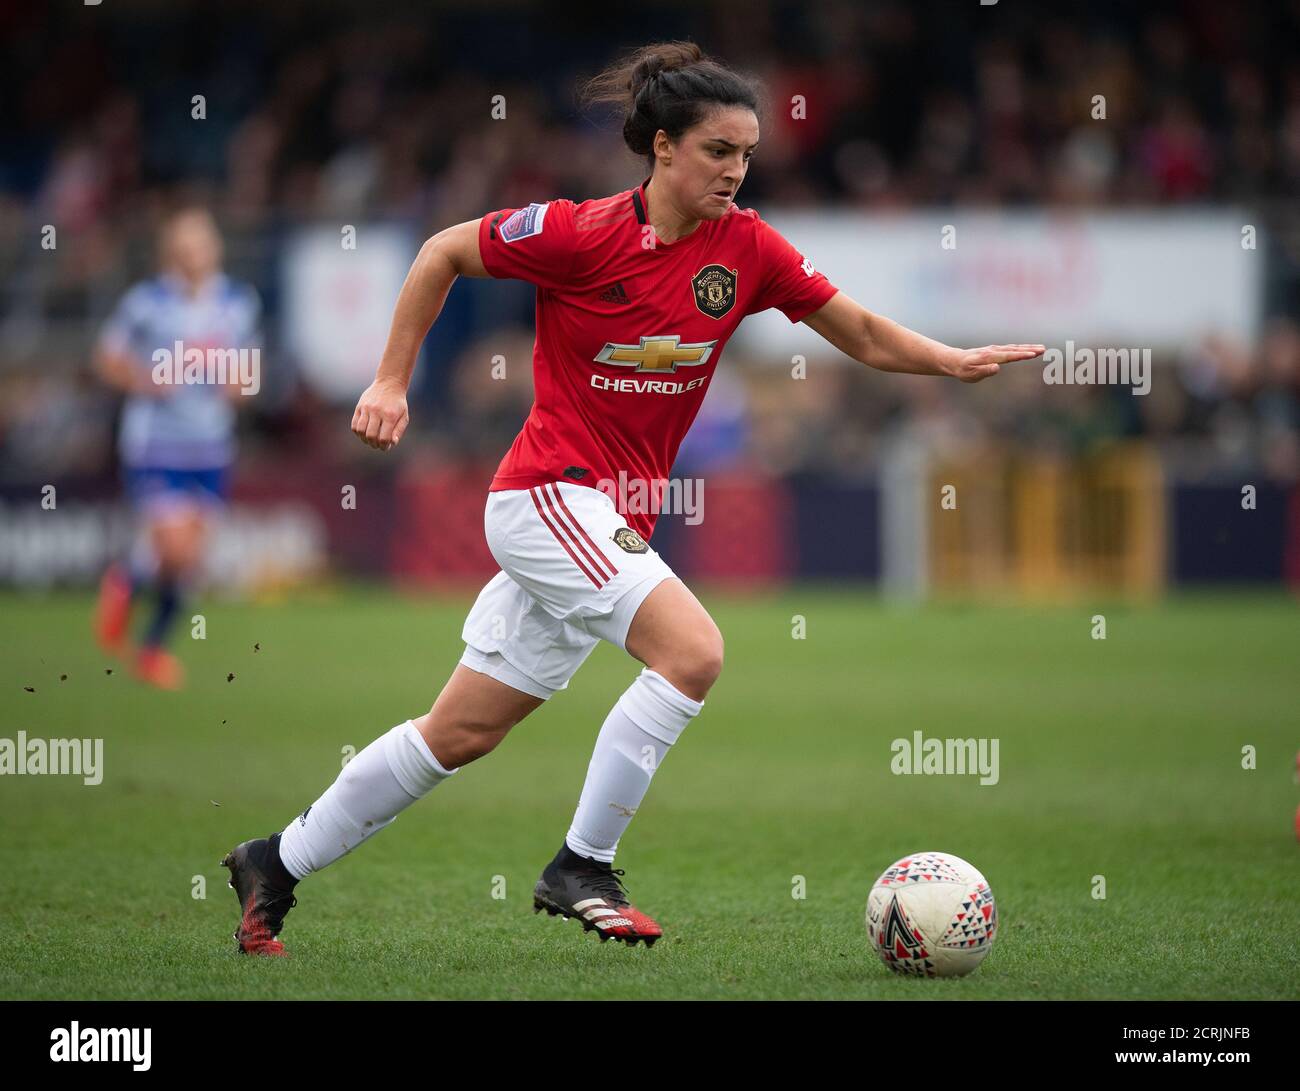 Manchester United's Jessica Sigsworth   PHOTO CREDIT : © MARK PAIN / ALAMY STOCK PHOTO Stock Photo